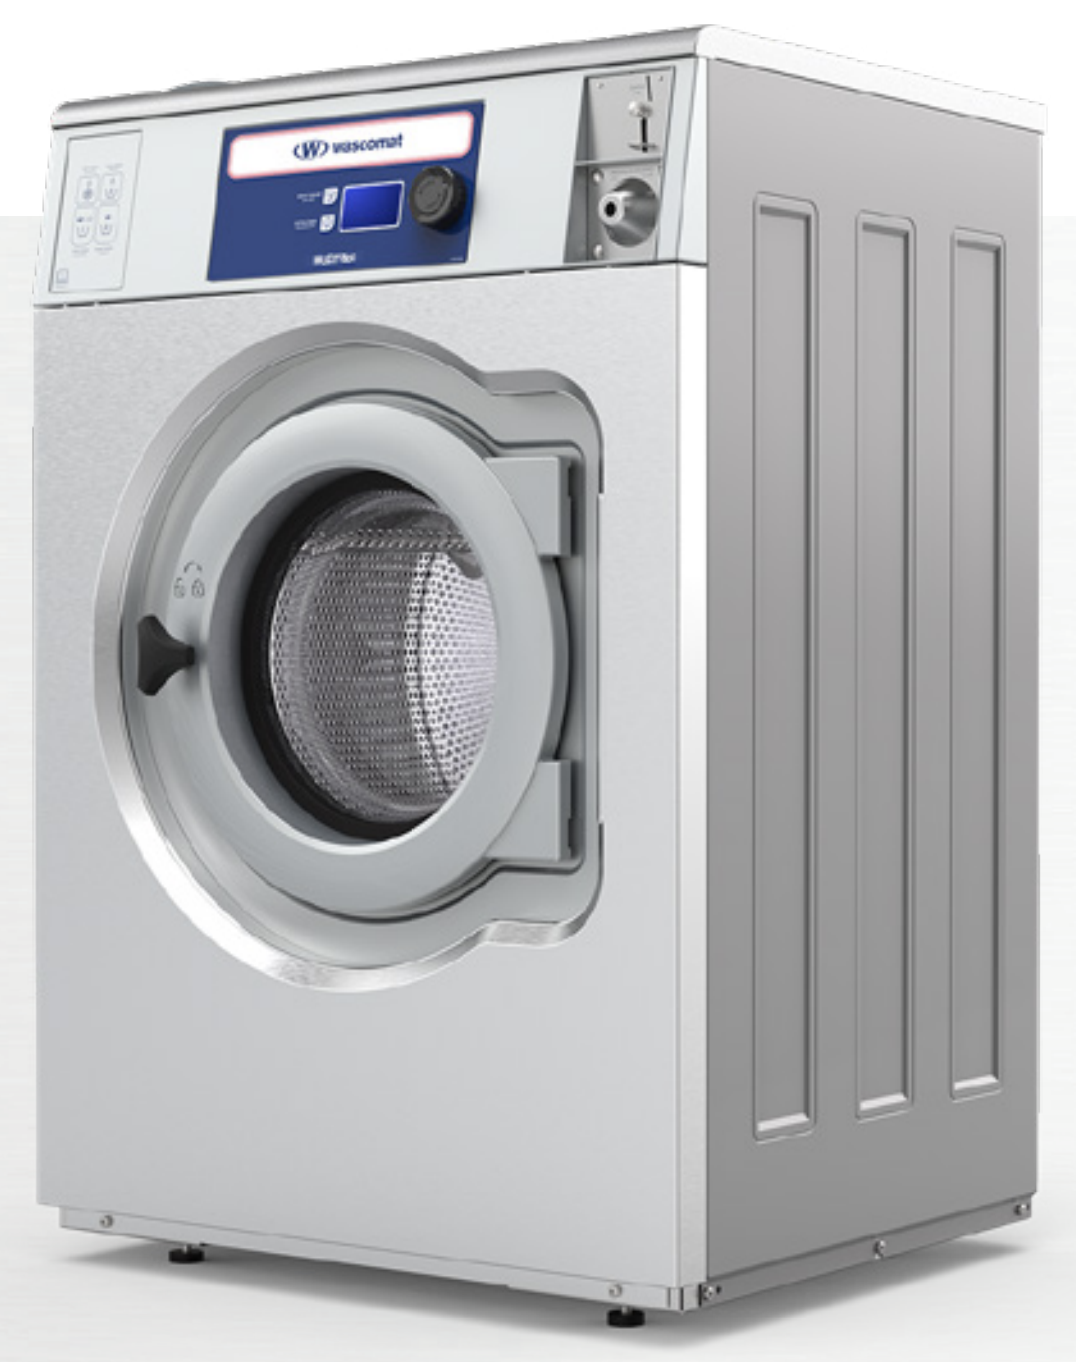 New 2022 Wascomat Wud718 - Lakeside Laundry Equipment